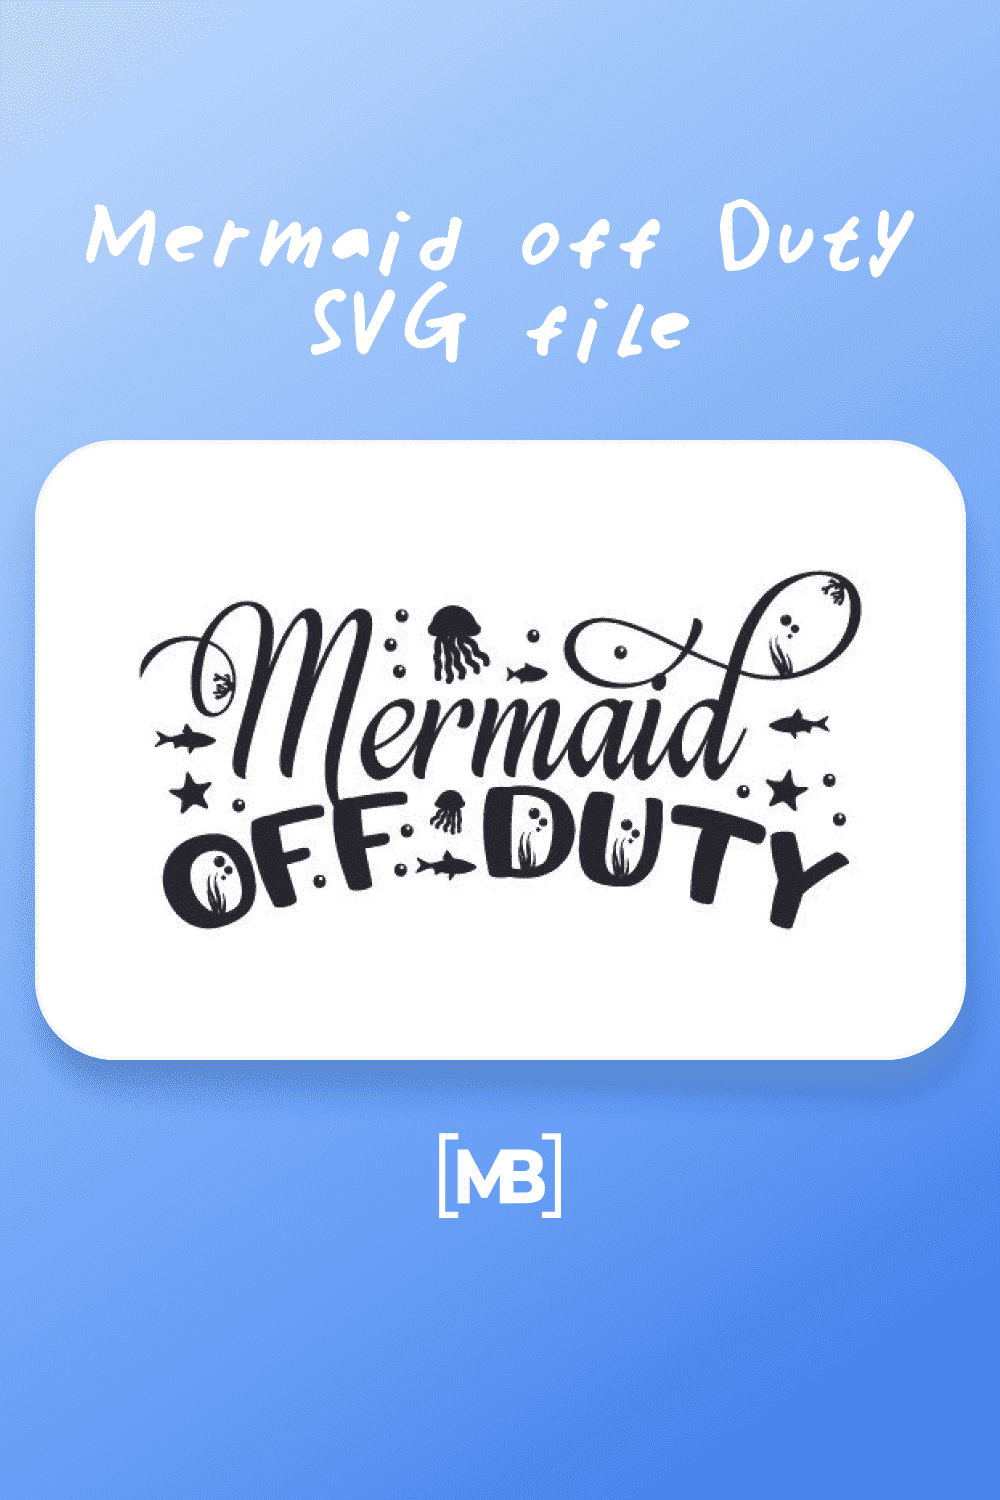 Mermaid off Duty SVG file.